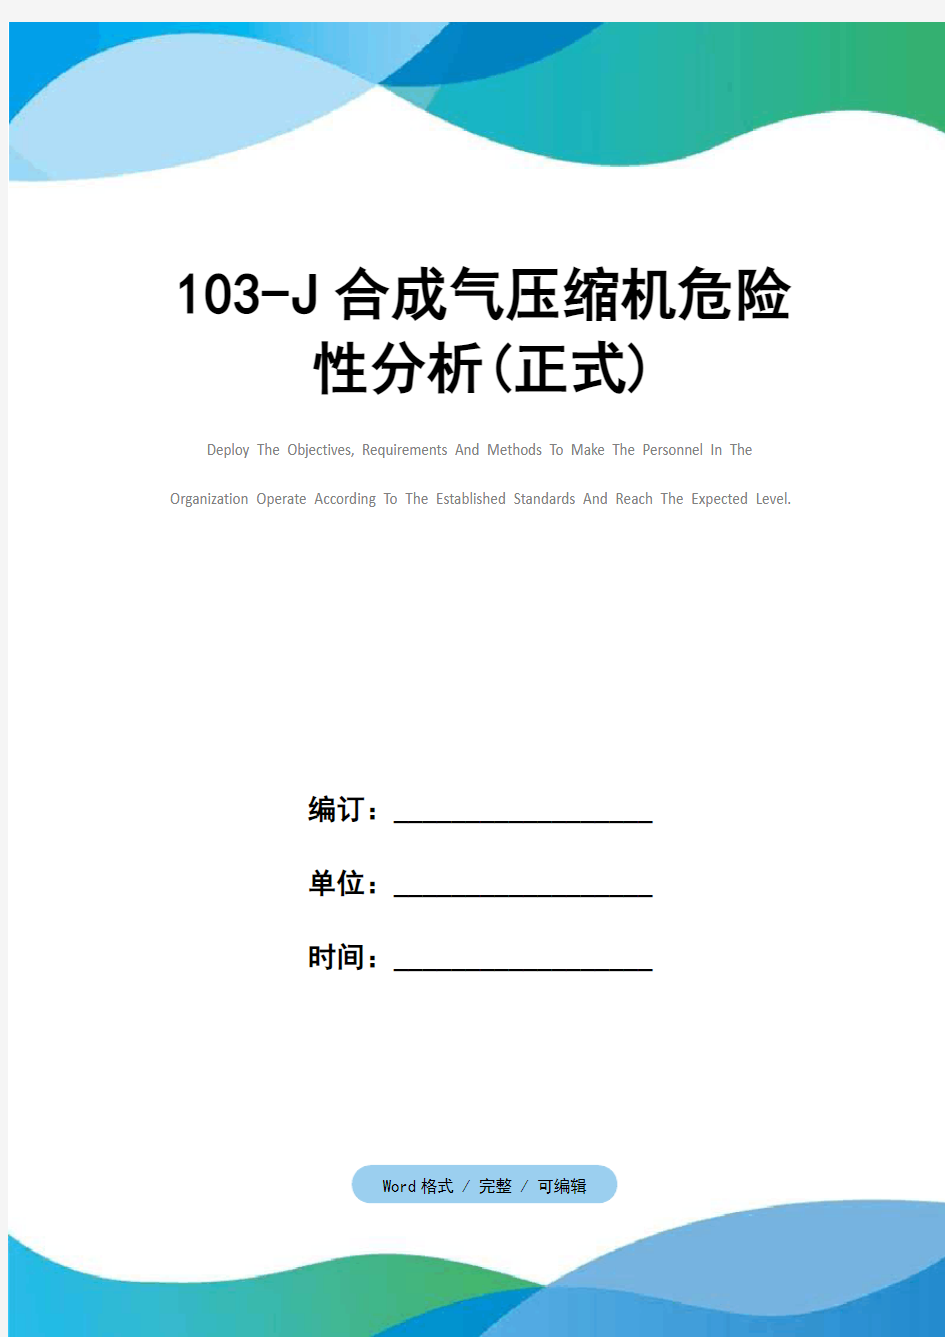 103-J合成气压缩机危险性分析(正式)